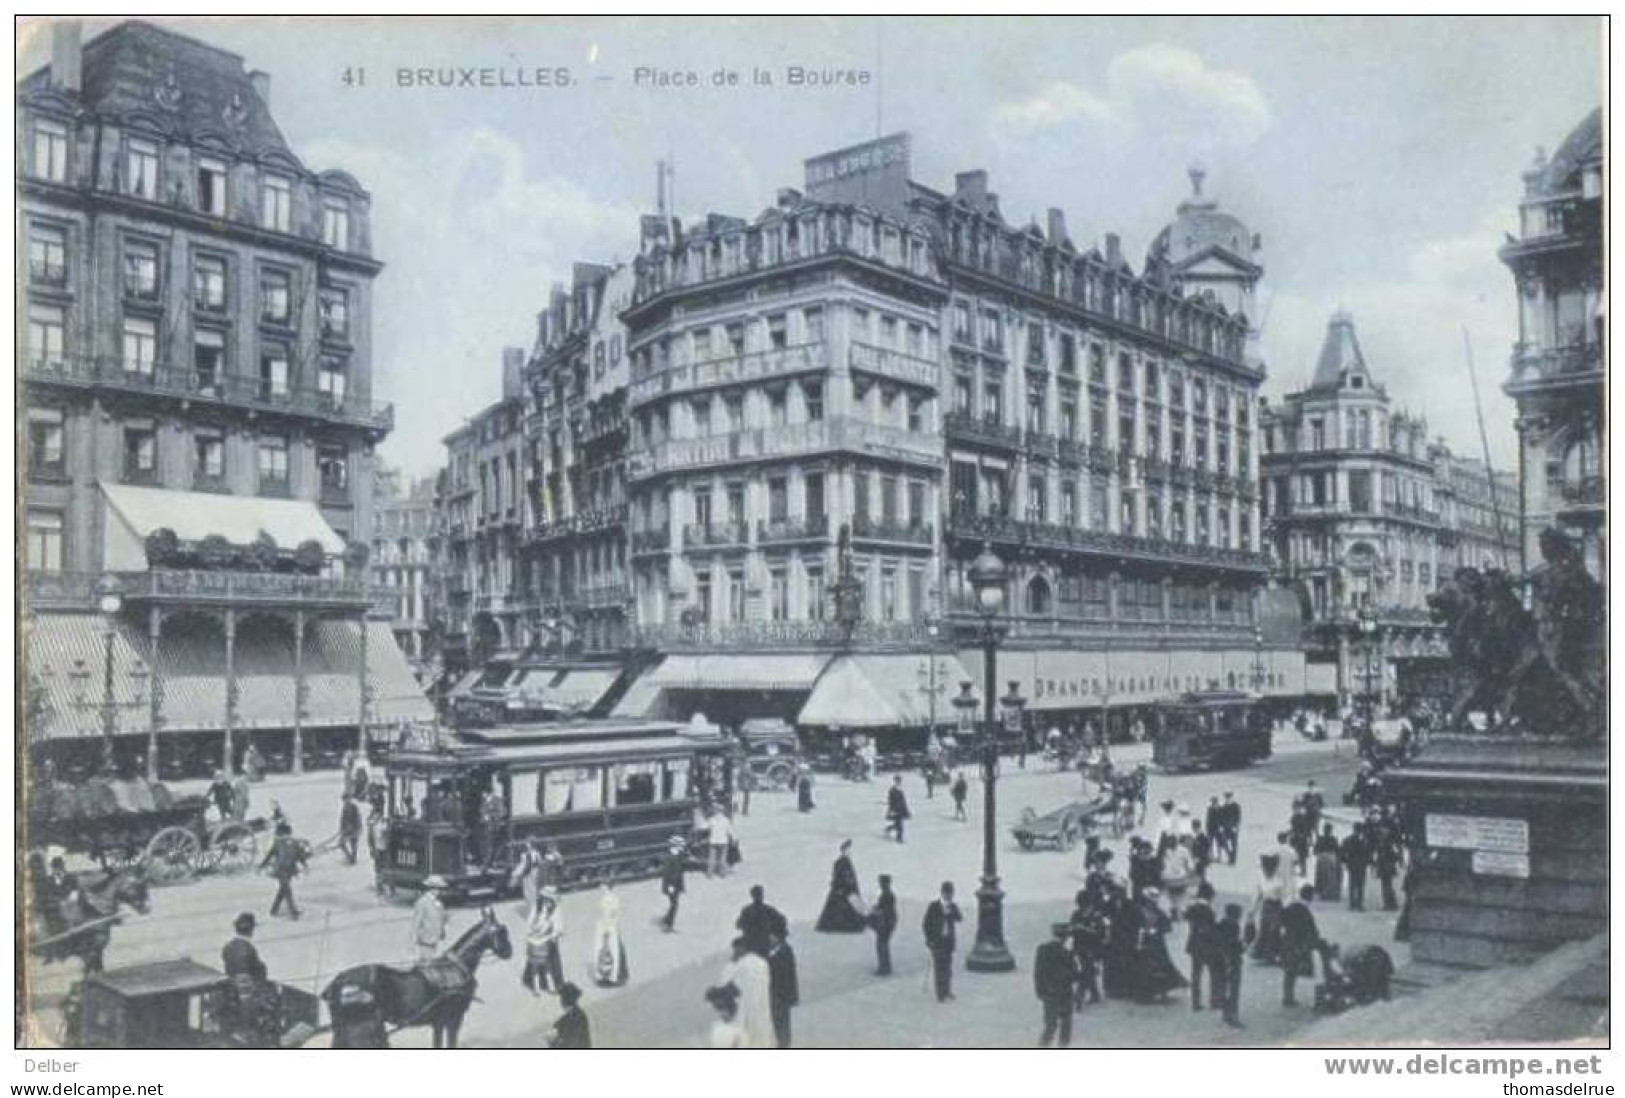 Zv889: 41 BRUXELLES - Place De La BOURSE: Verstuud: S.M. >> 14* BRUGGE 14* BRUGES 15 XII 18: Noodstempel: Postagentschap - Noodstempels (1919)